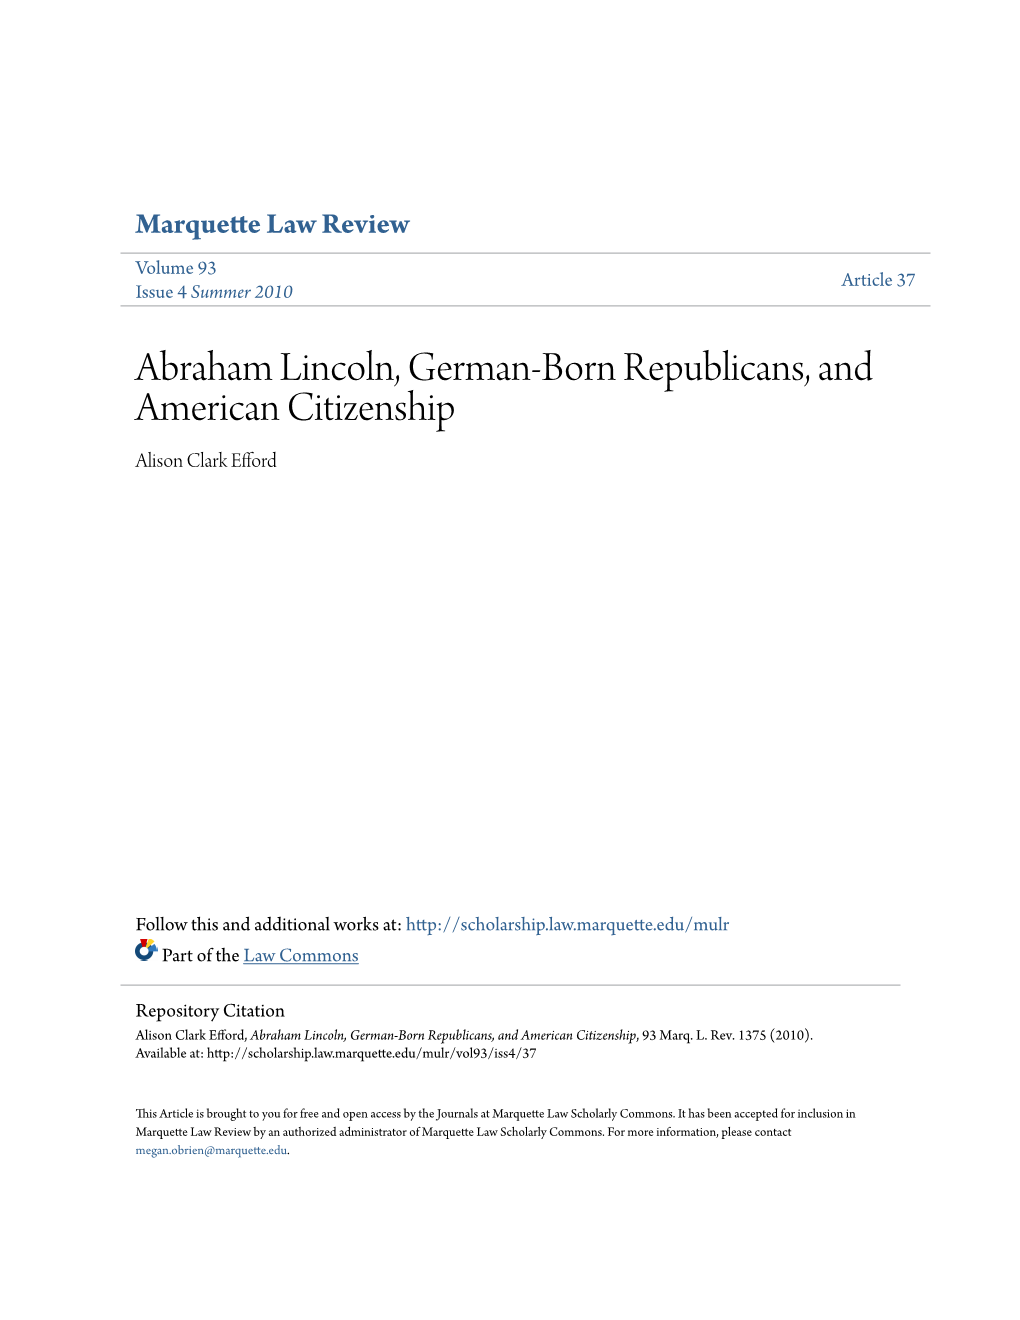 Abraham Lincoln, German-Born Republicans, and American Citizenship Alison Clark Efford